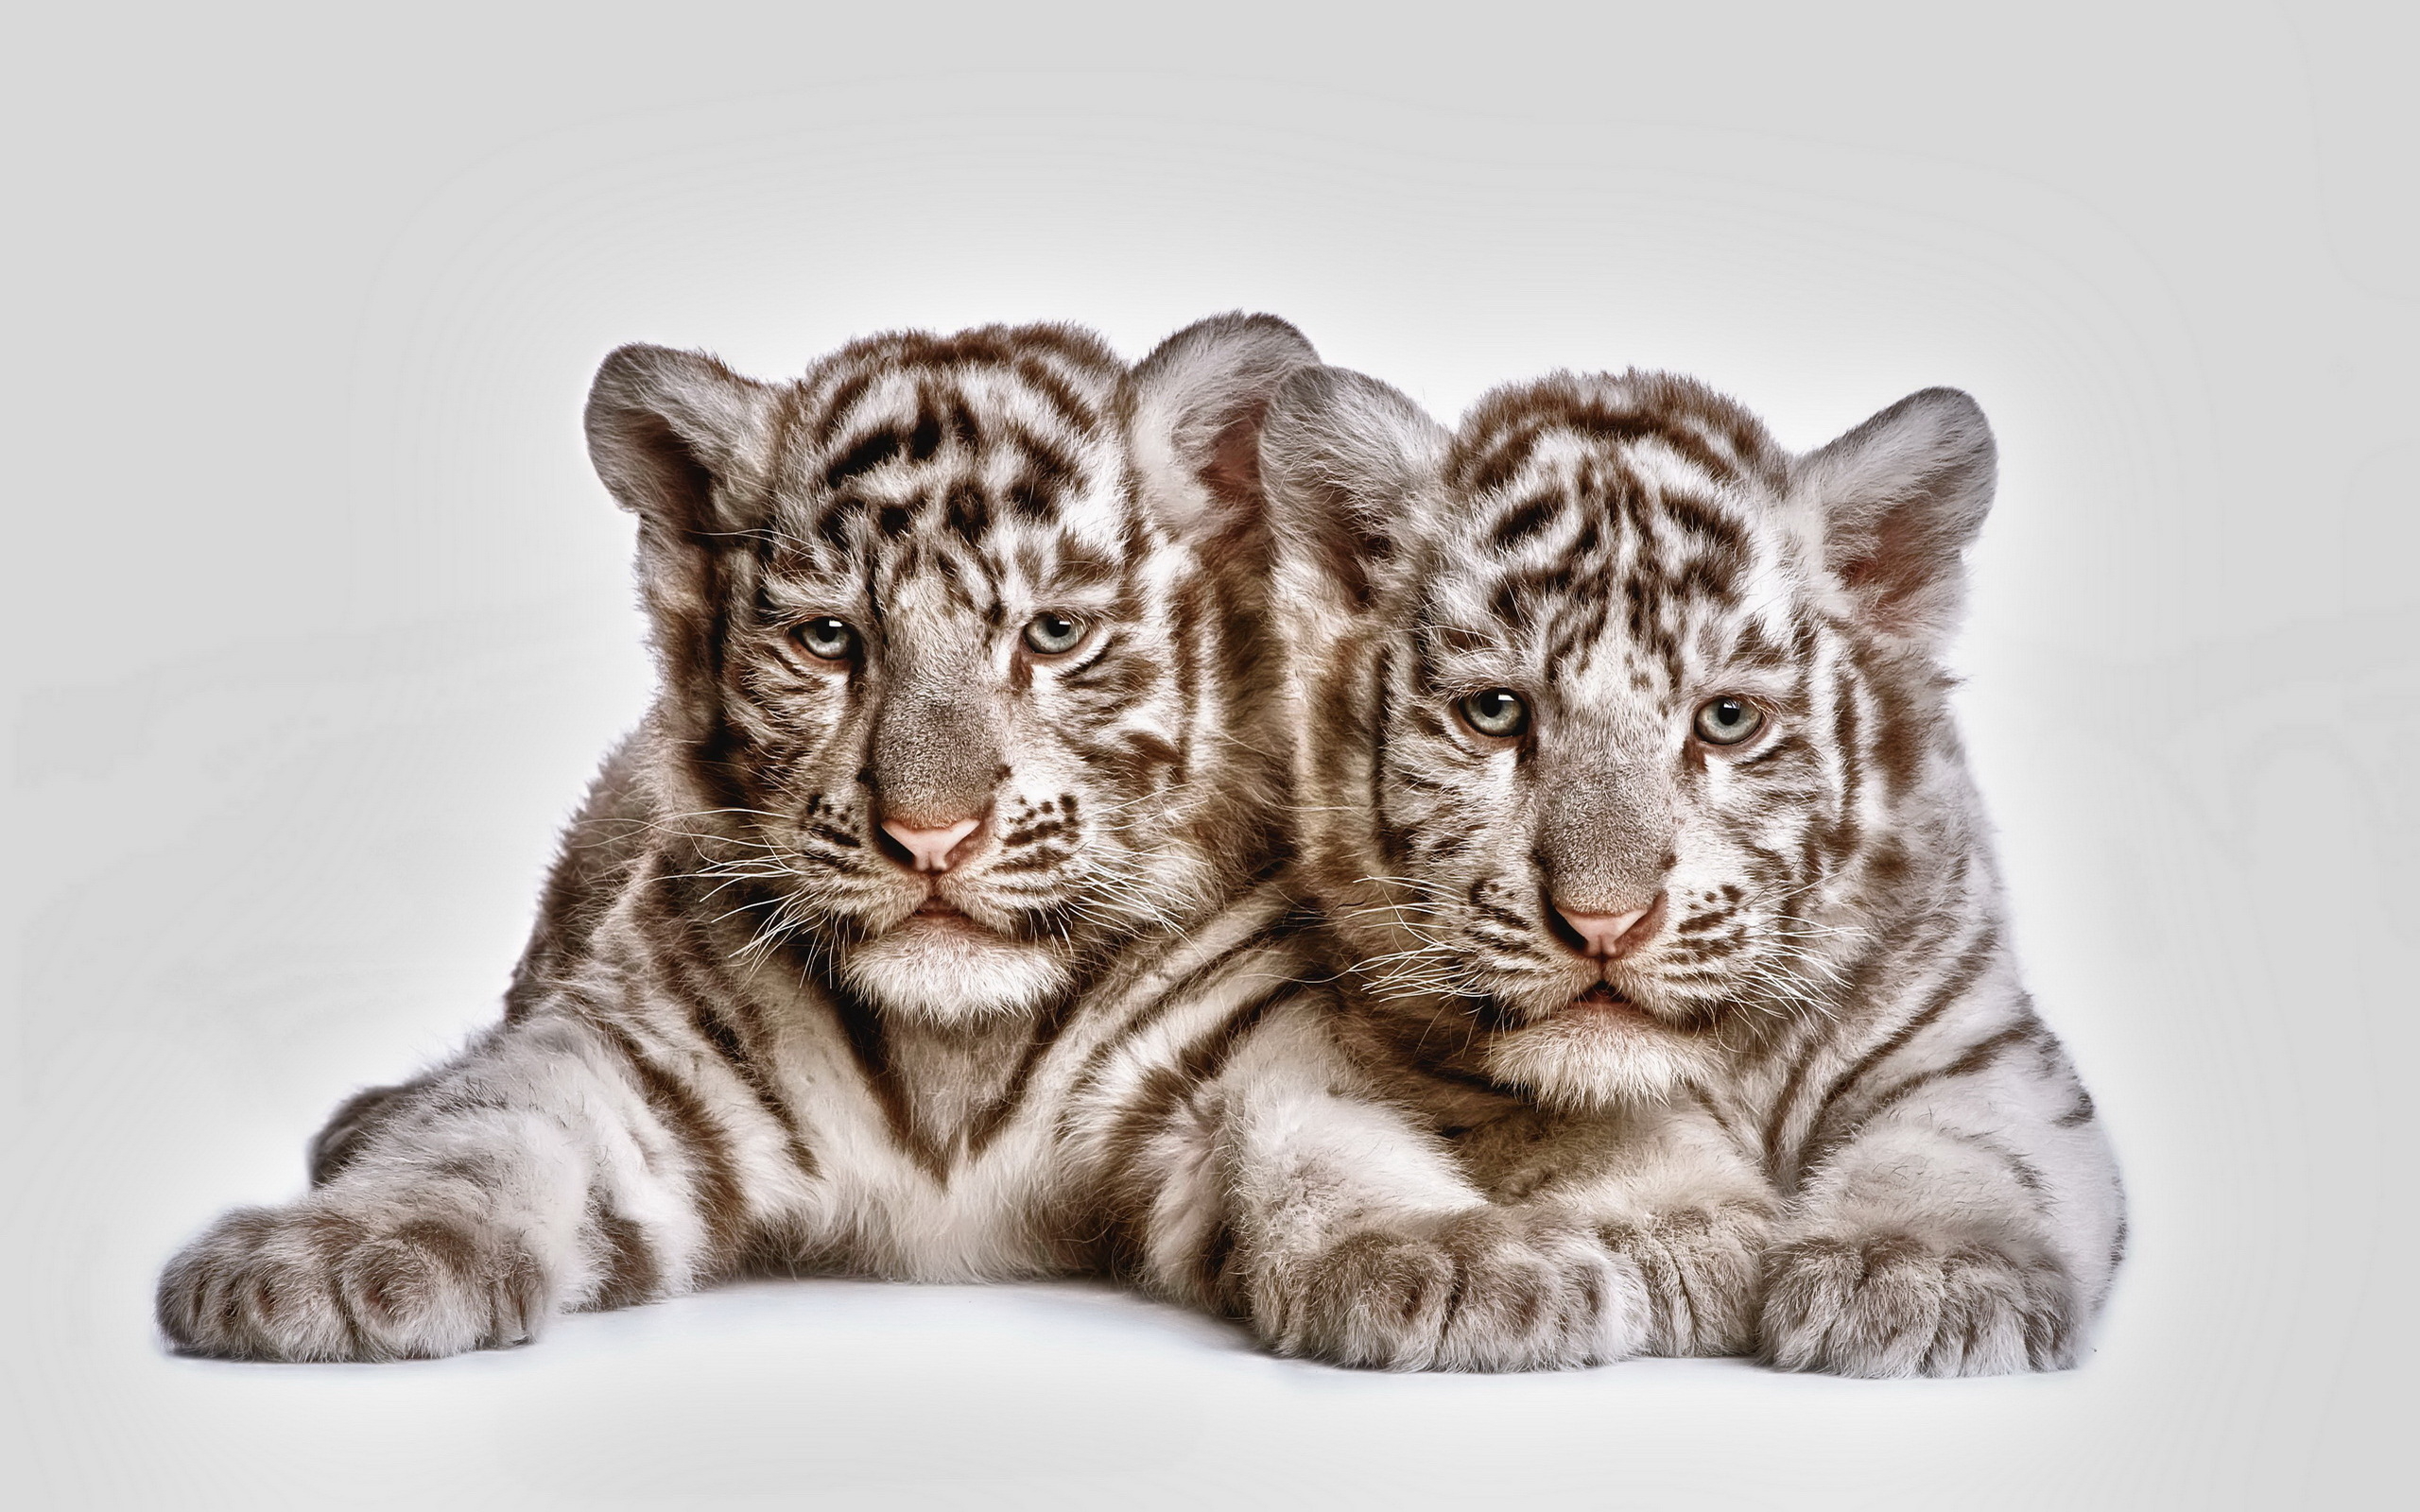 Tow cute white tiger cubs